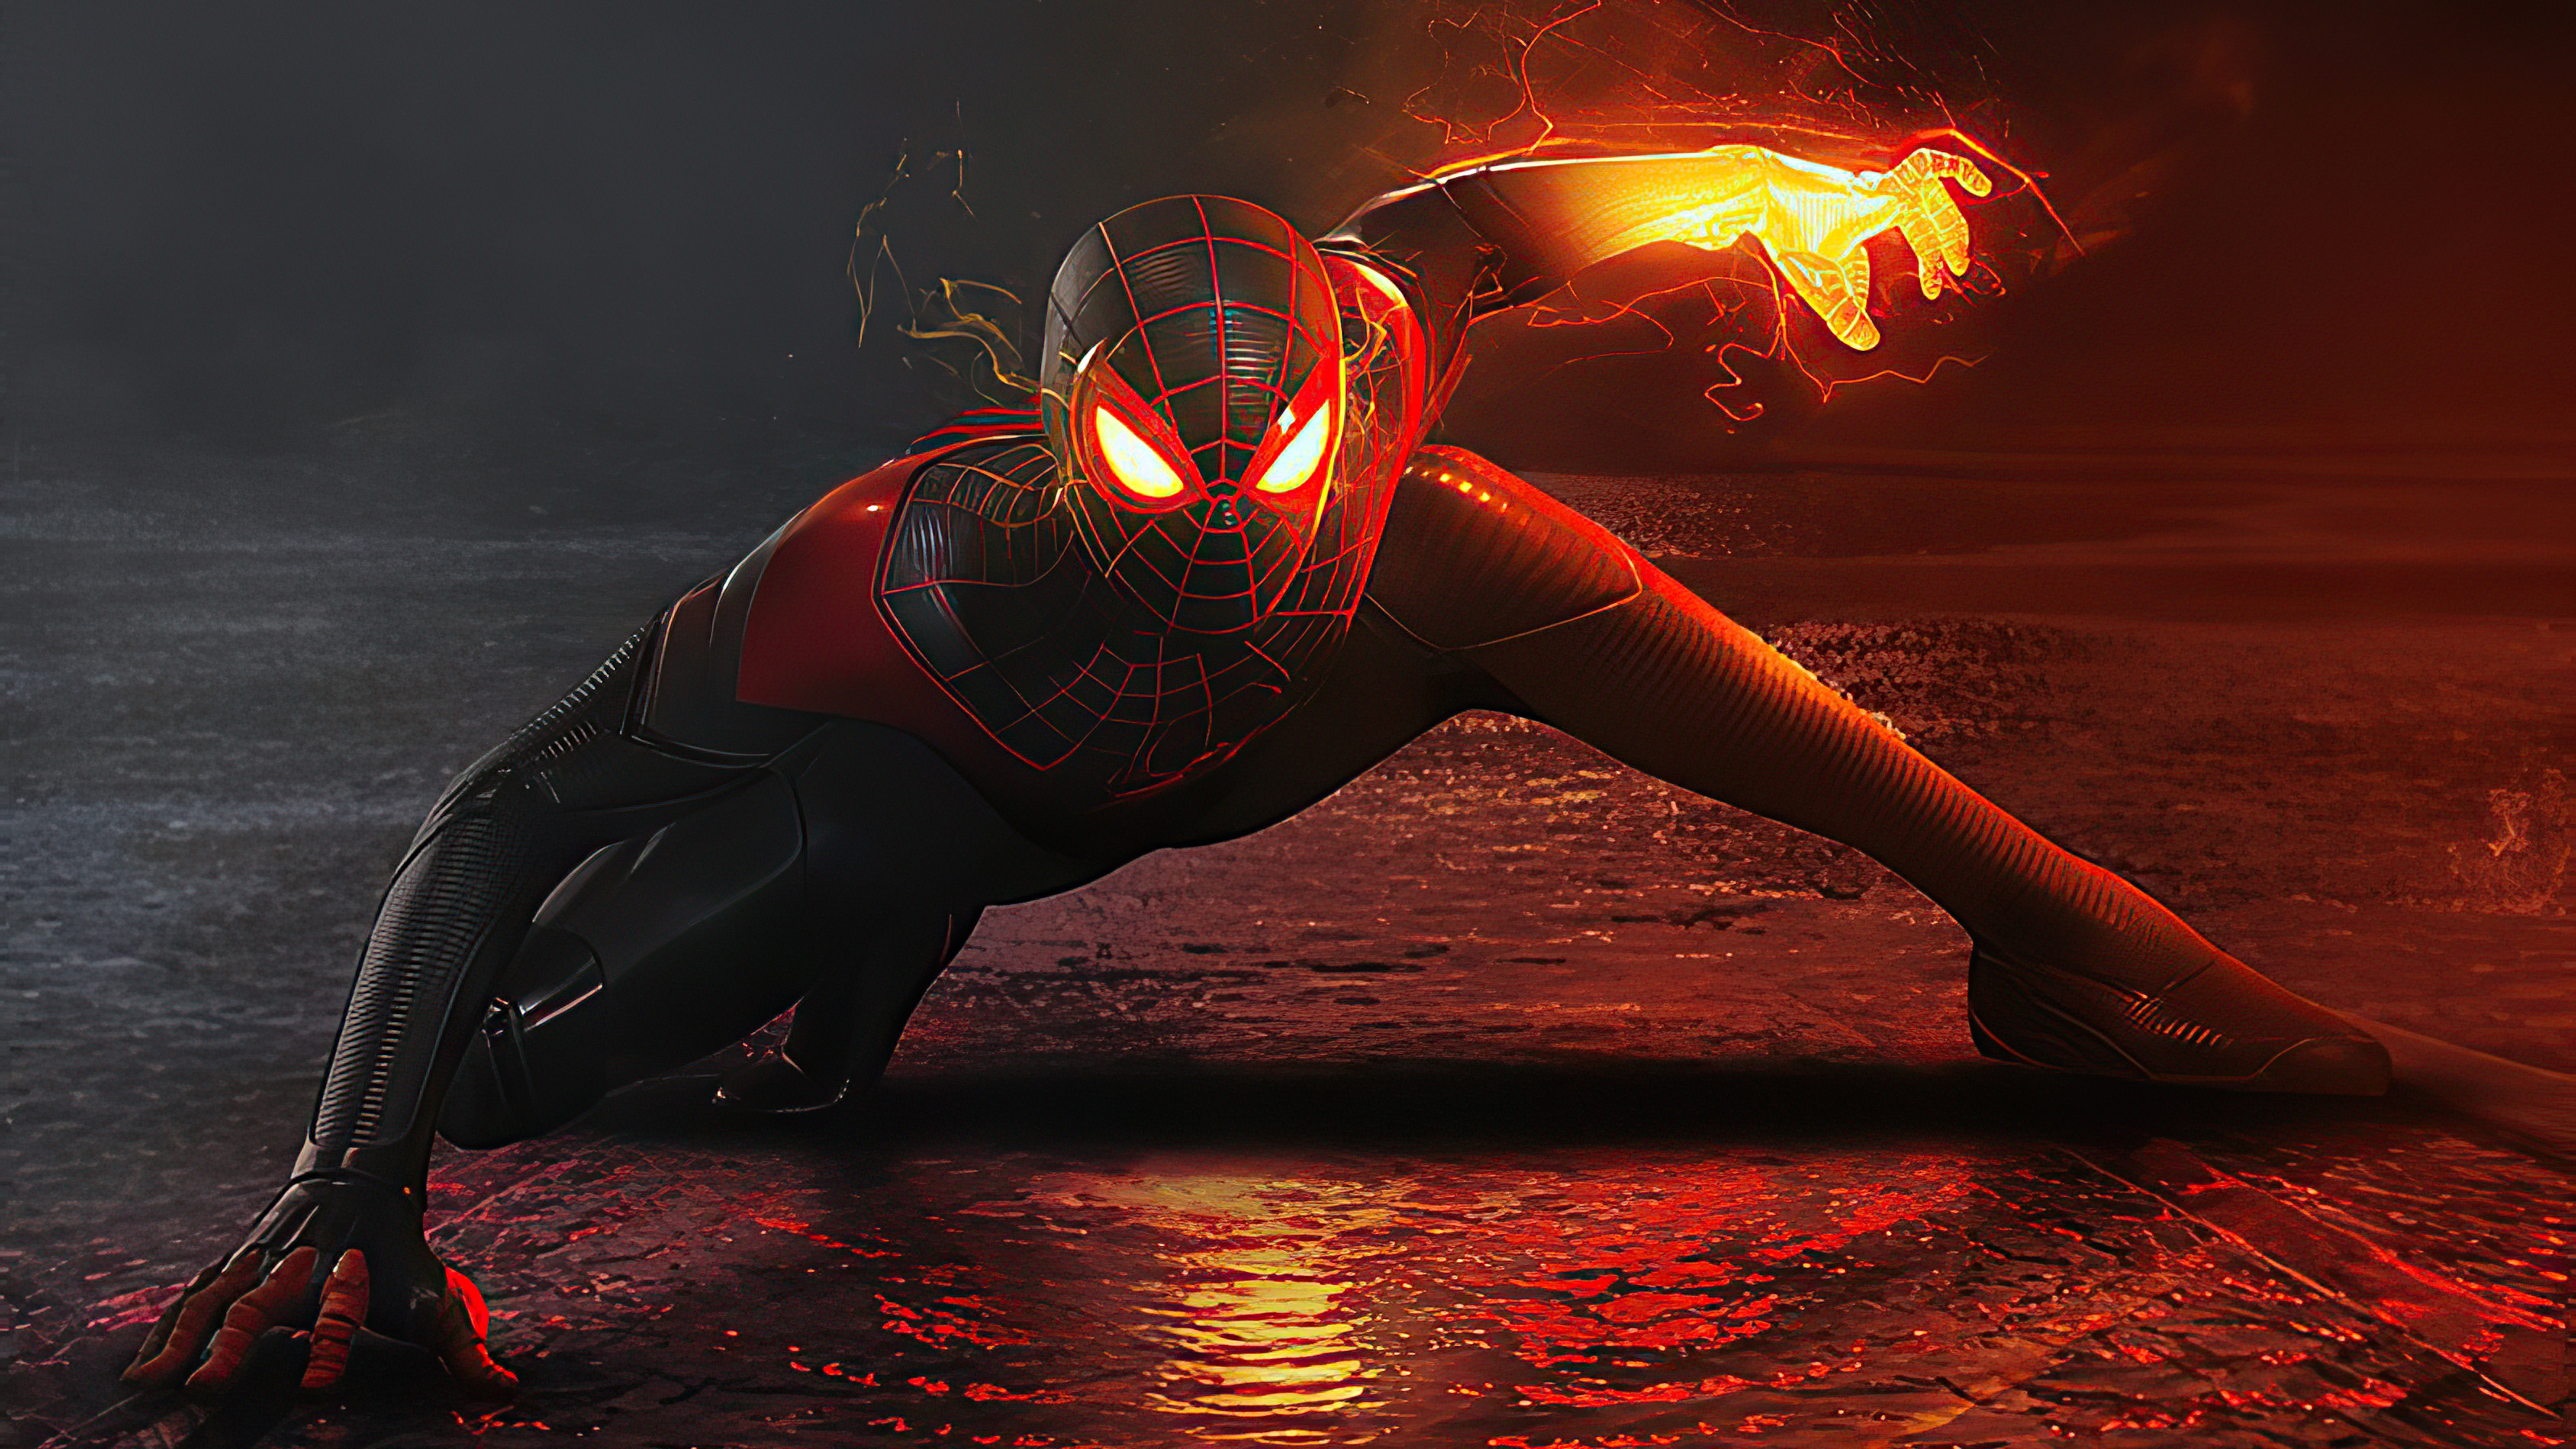 2020 Black Spiderman 4K Artwork Wallpaper,Hd Superheroes Wallpapers,4K